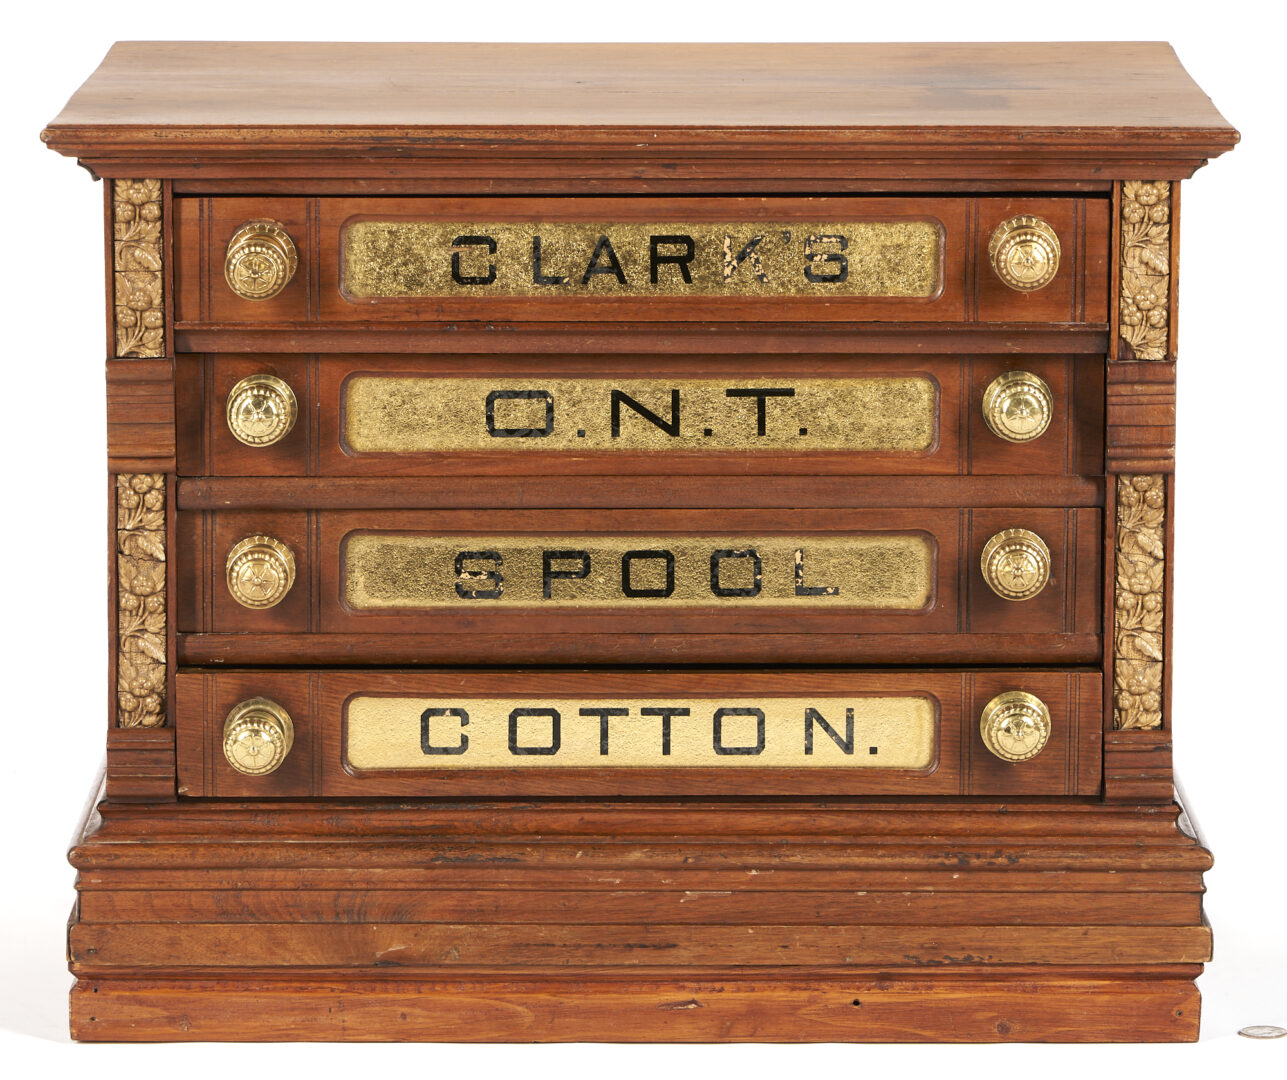 Lot 679: Clark’s O.N.T. 4 Drawer Spool Cabinet